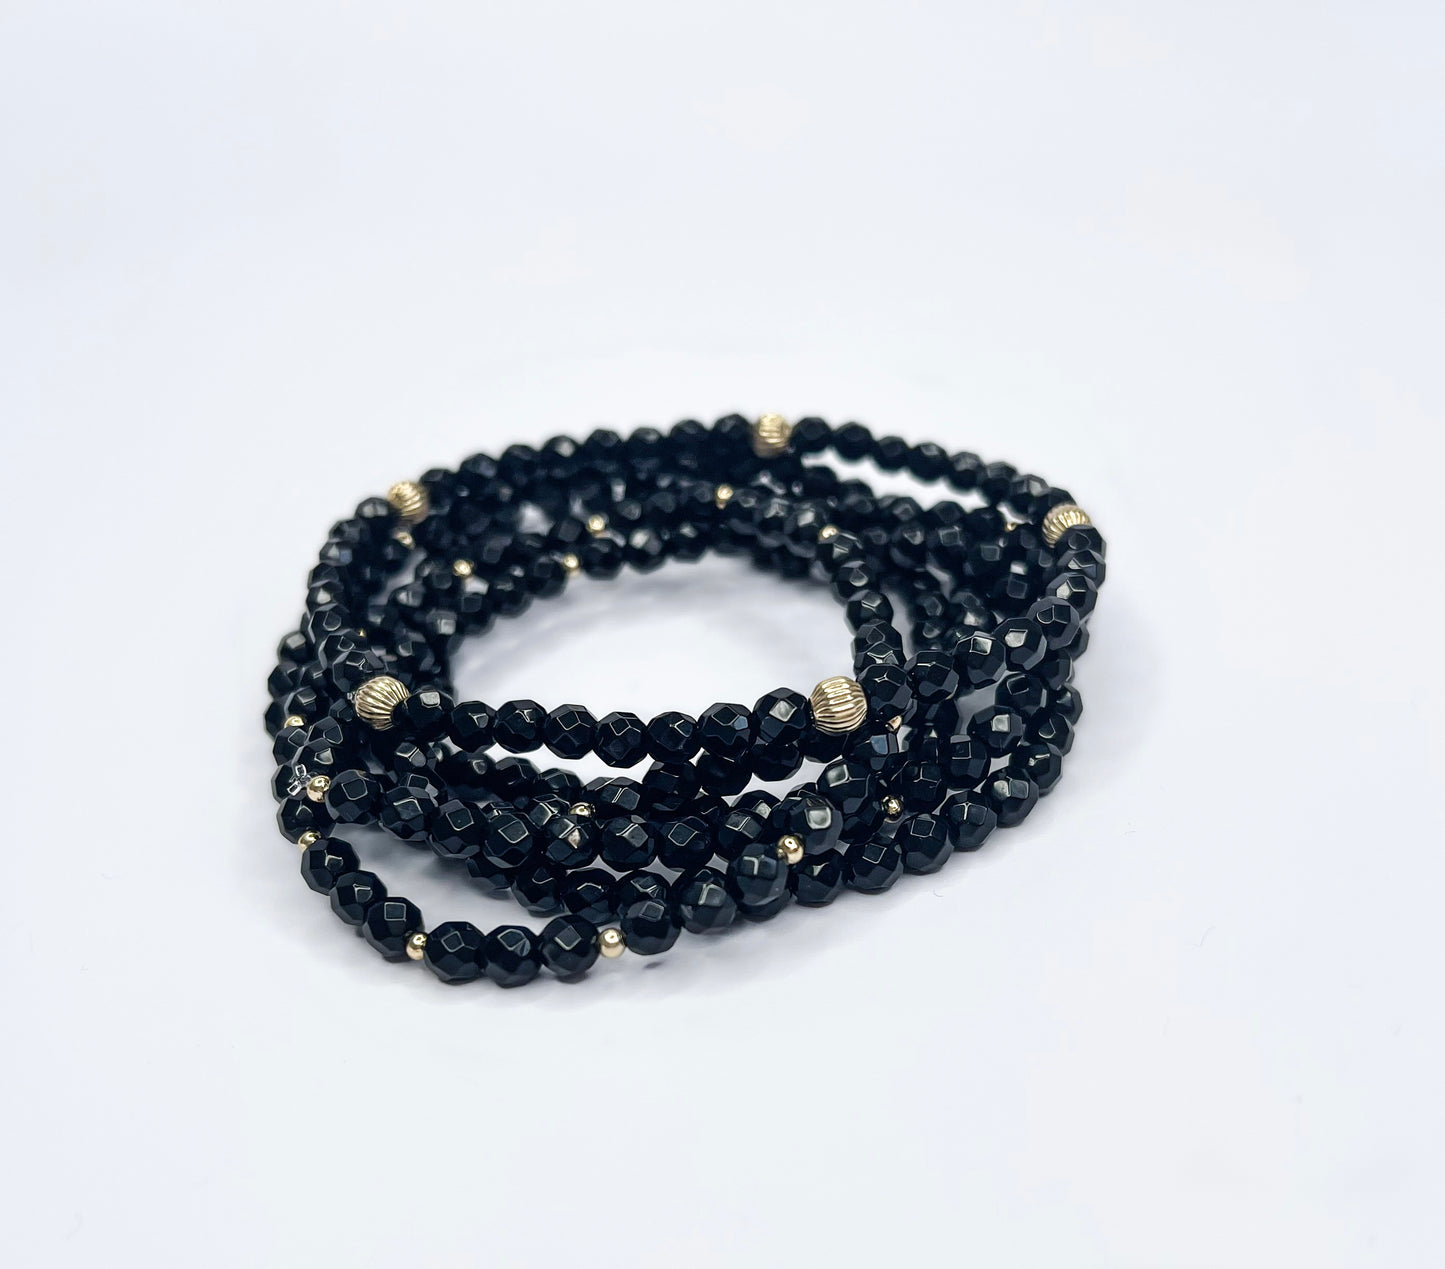 Black onyx, gold accent bracelet